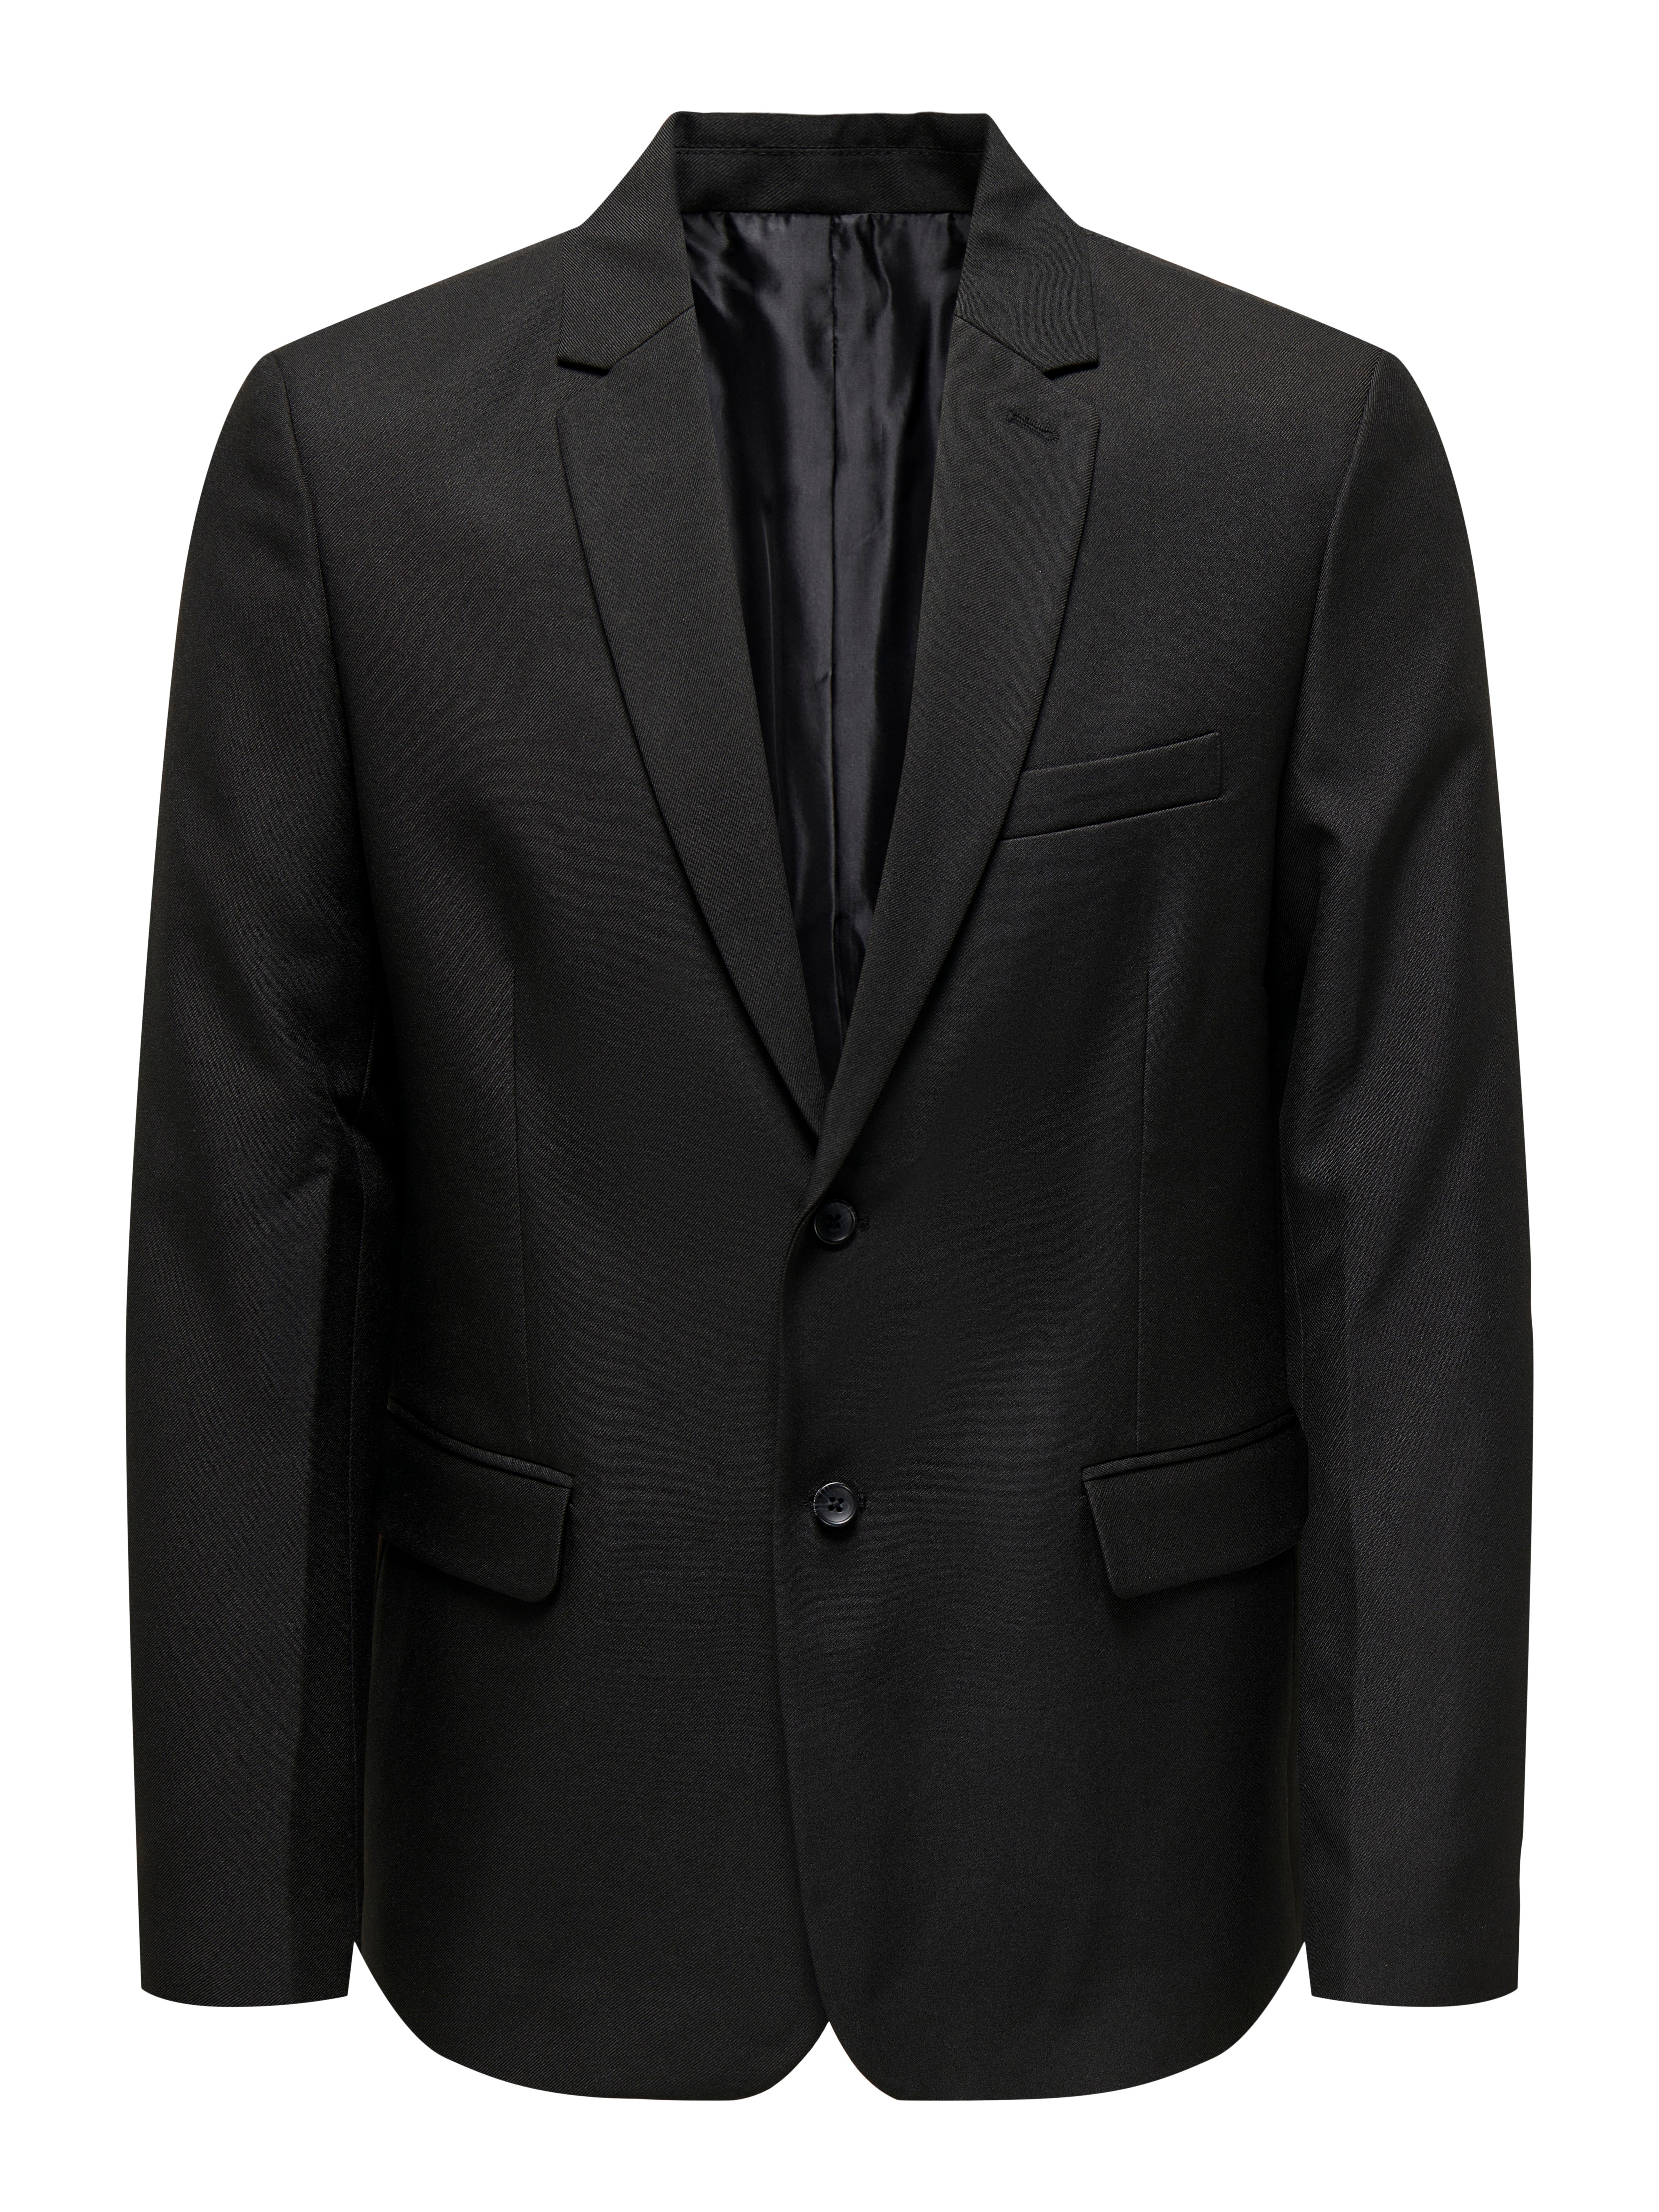 Men's Black Jackets, Black Blazers & Suit Jackets